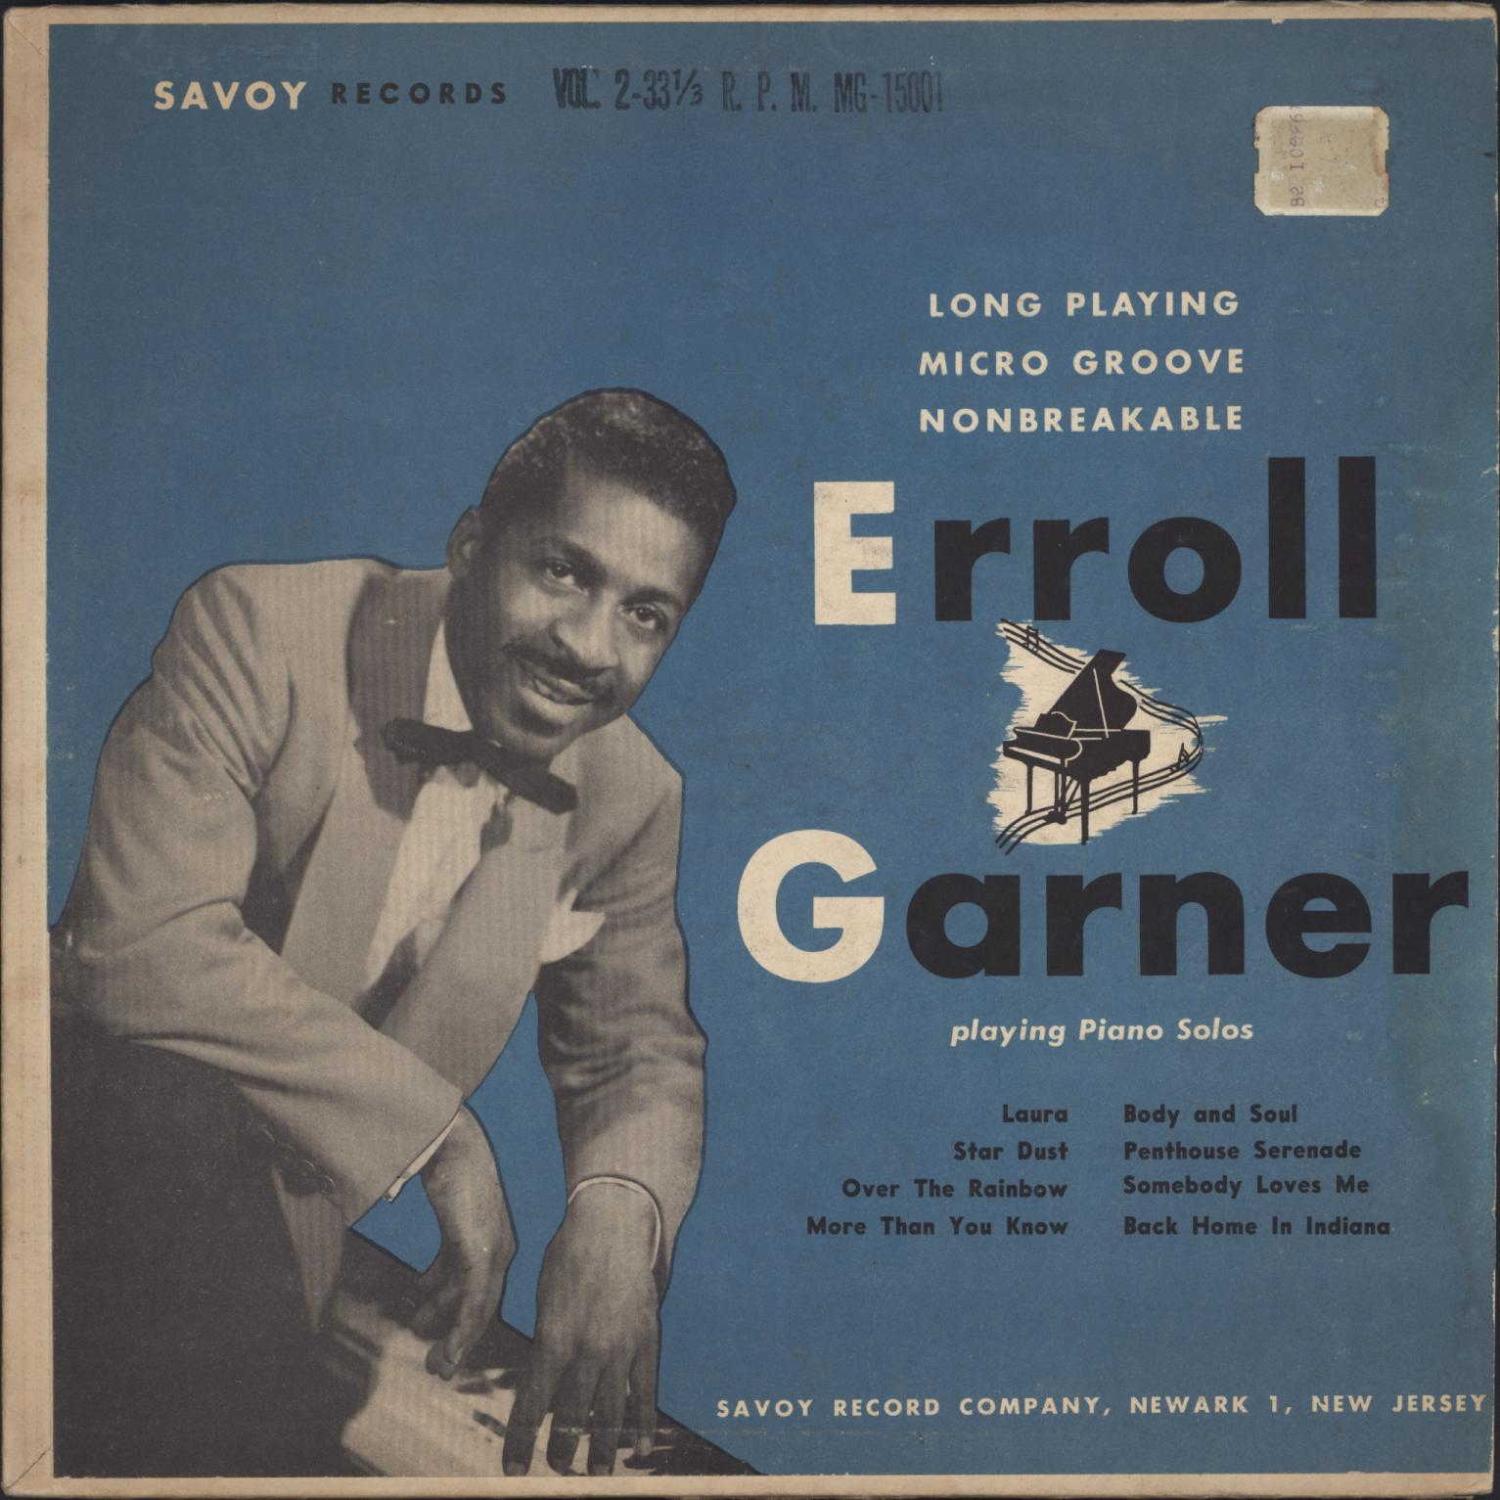 Garner playing Piano Solos, Vol. 2 (VINYL BOP LP) by Garner, Erroll: Very Good Hardcover (1950) 1st Edition | Cat's